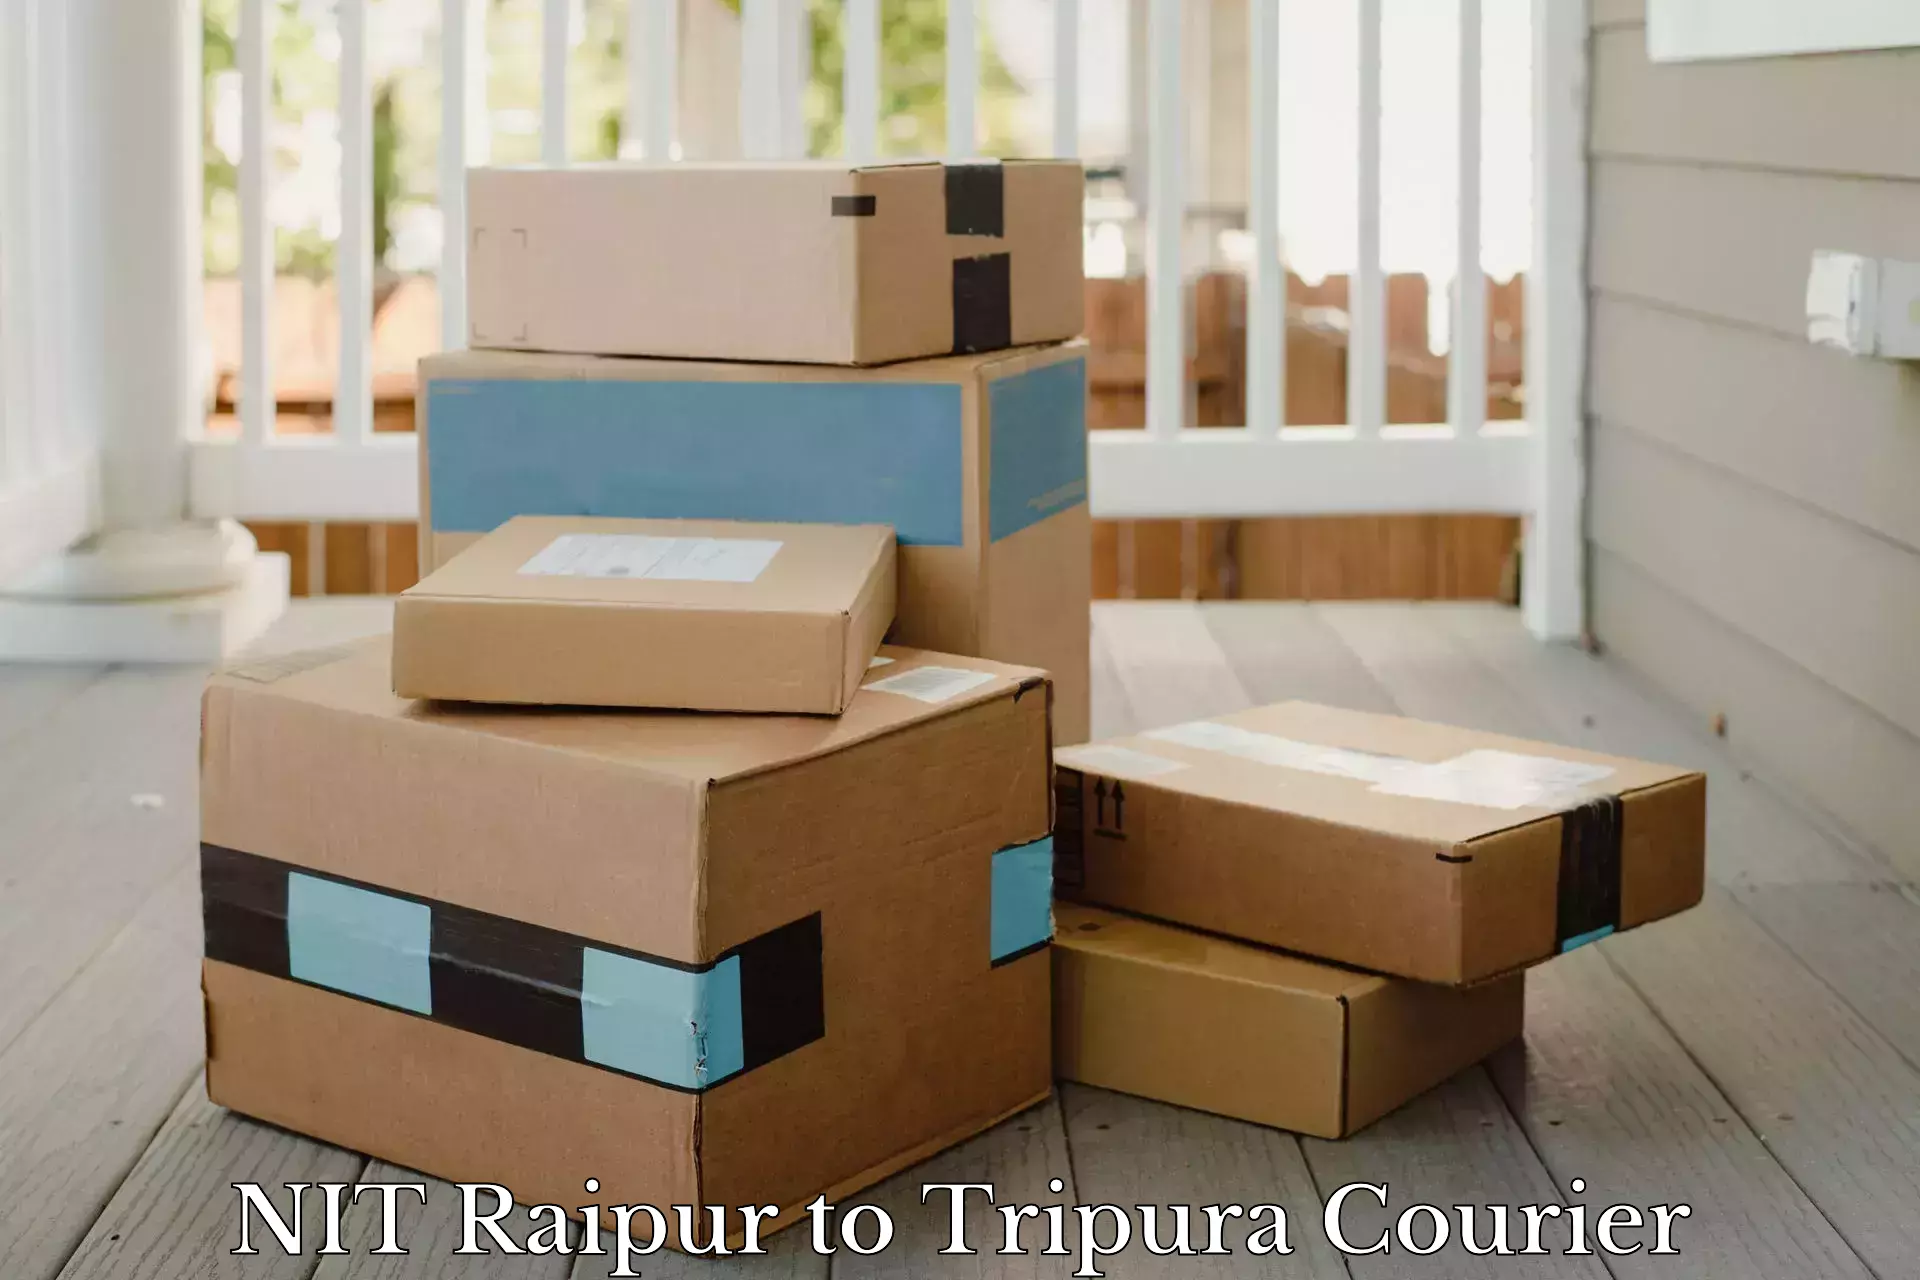 Express courier facilities NIT Raipur to Udaipur Tripura